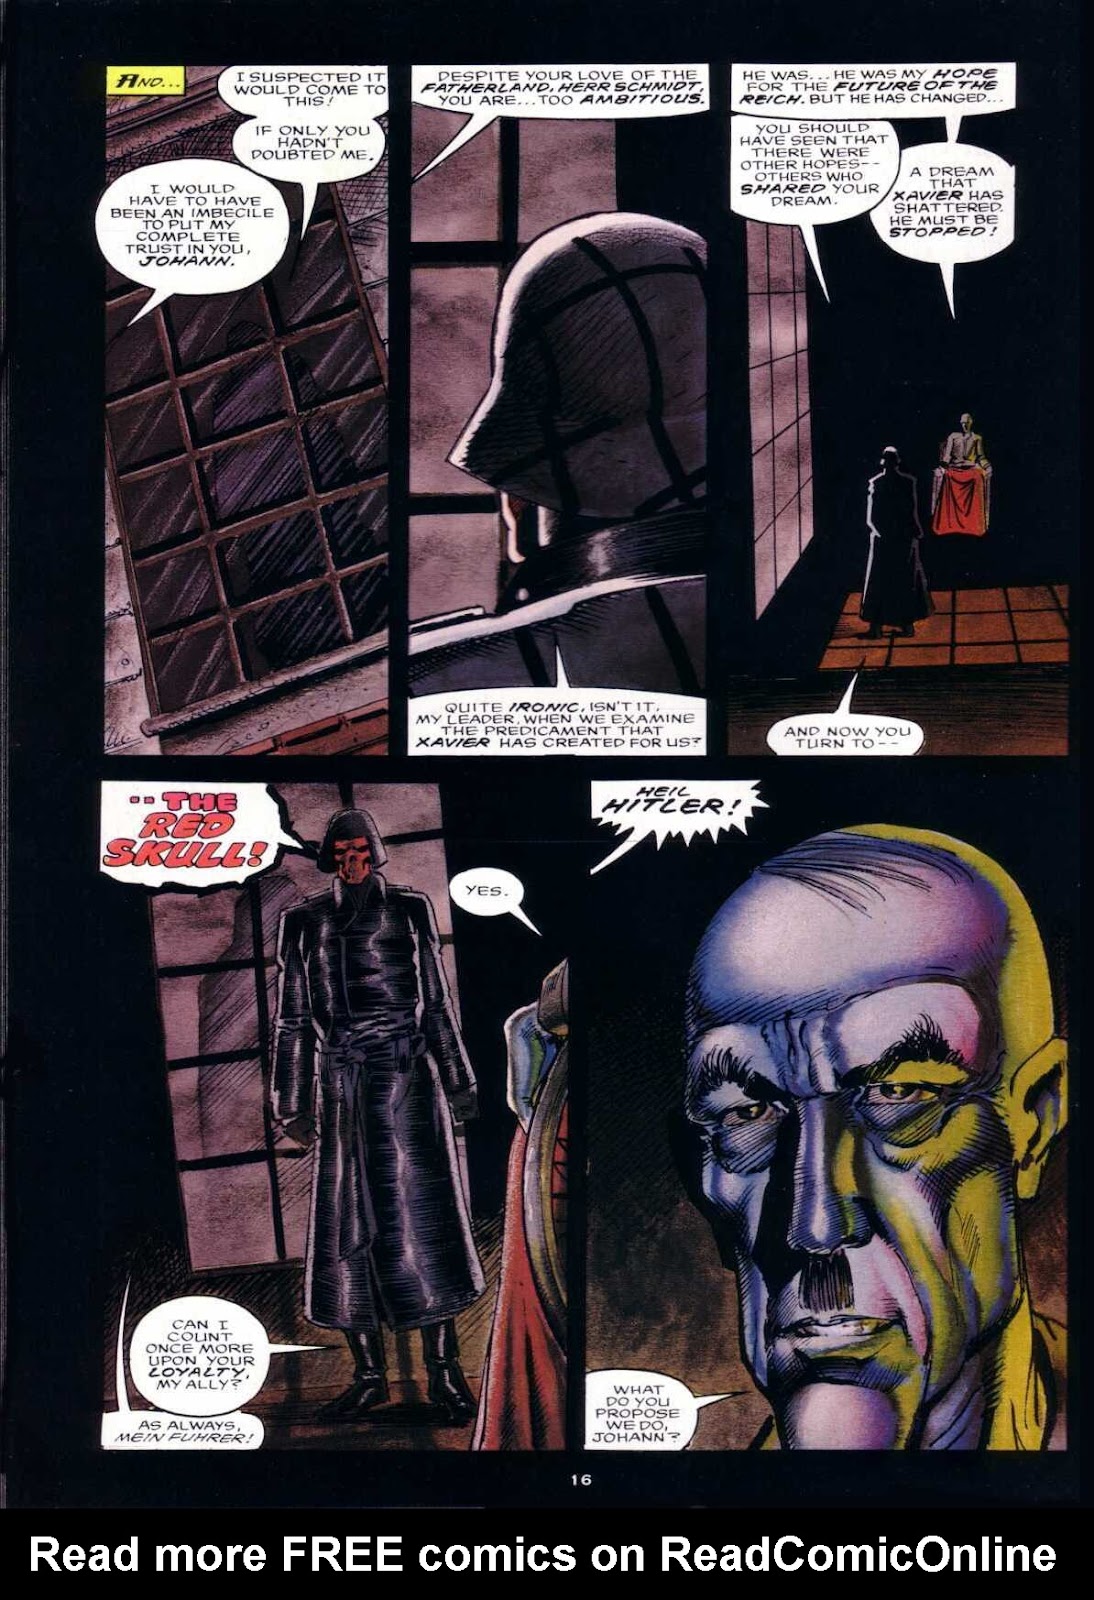 Marvel Graphic Novel issue 66 - Excalibur - Weird War III - Page 16